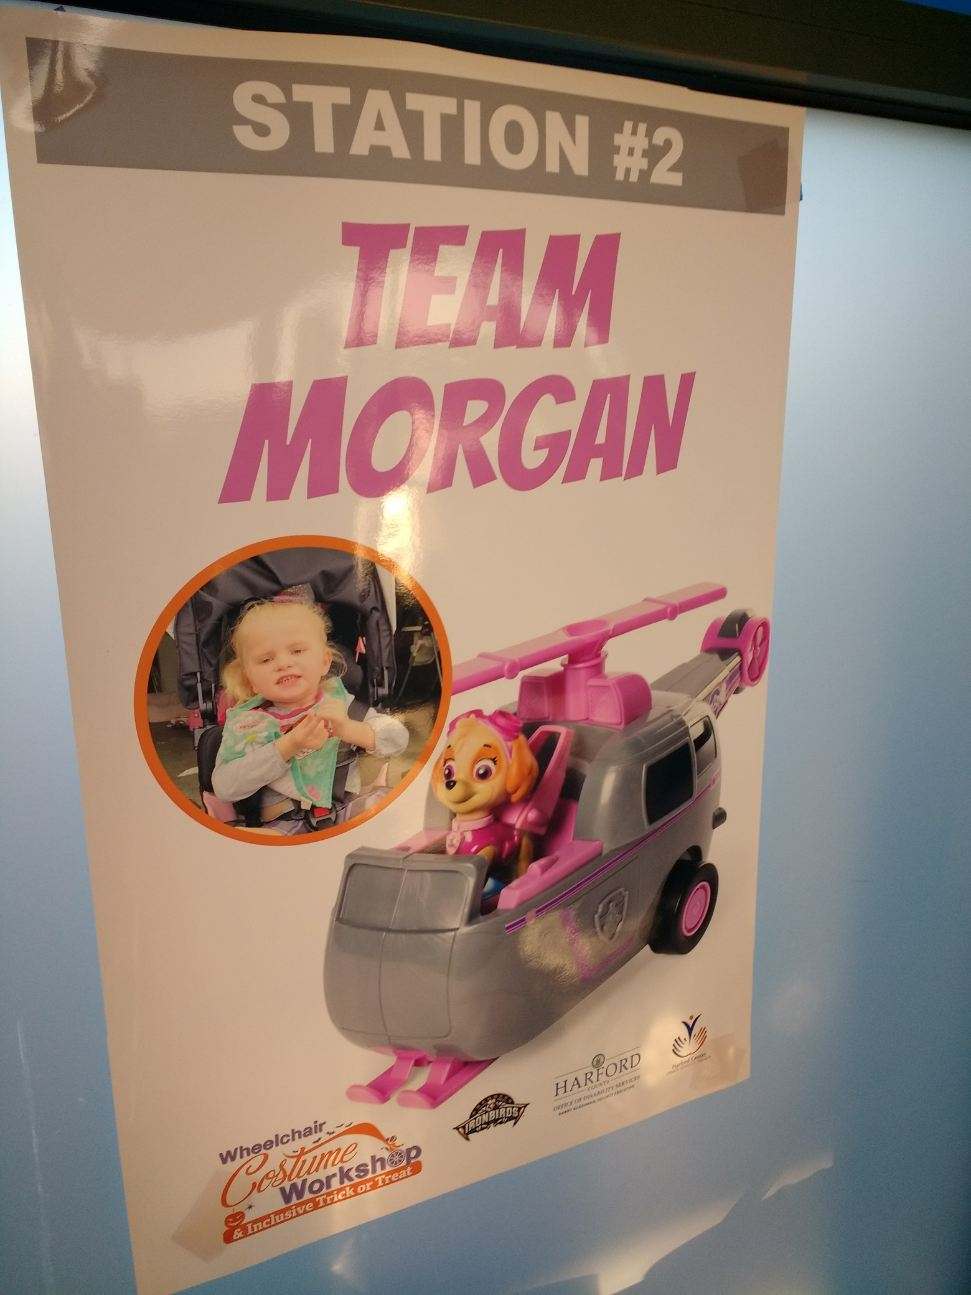 Morgan's Poster